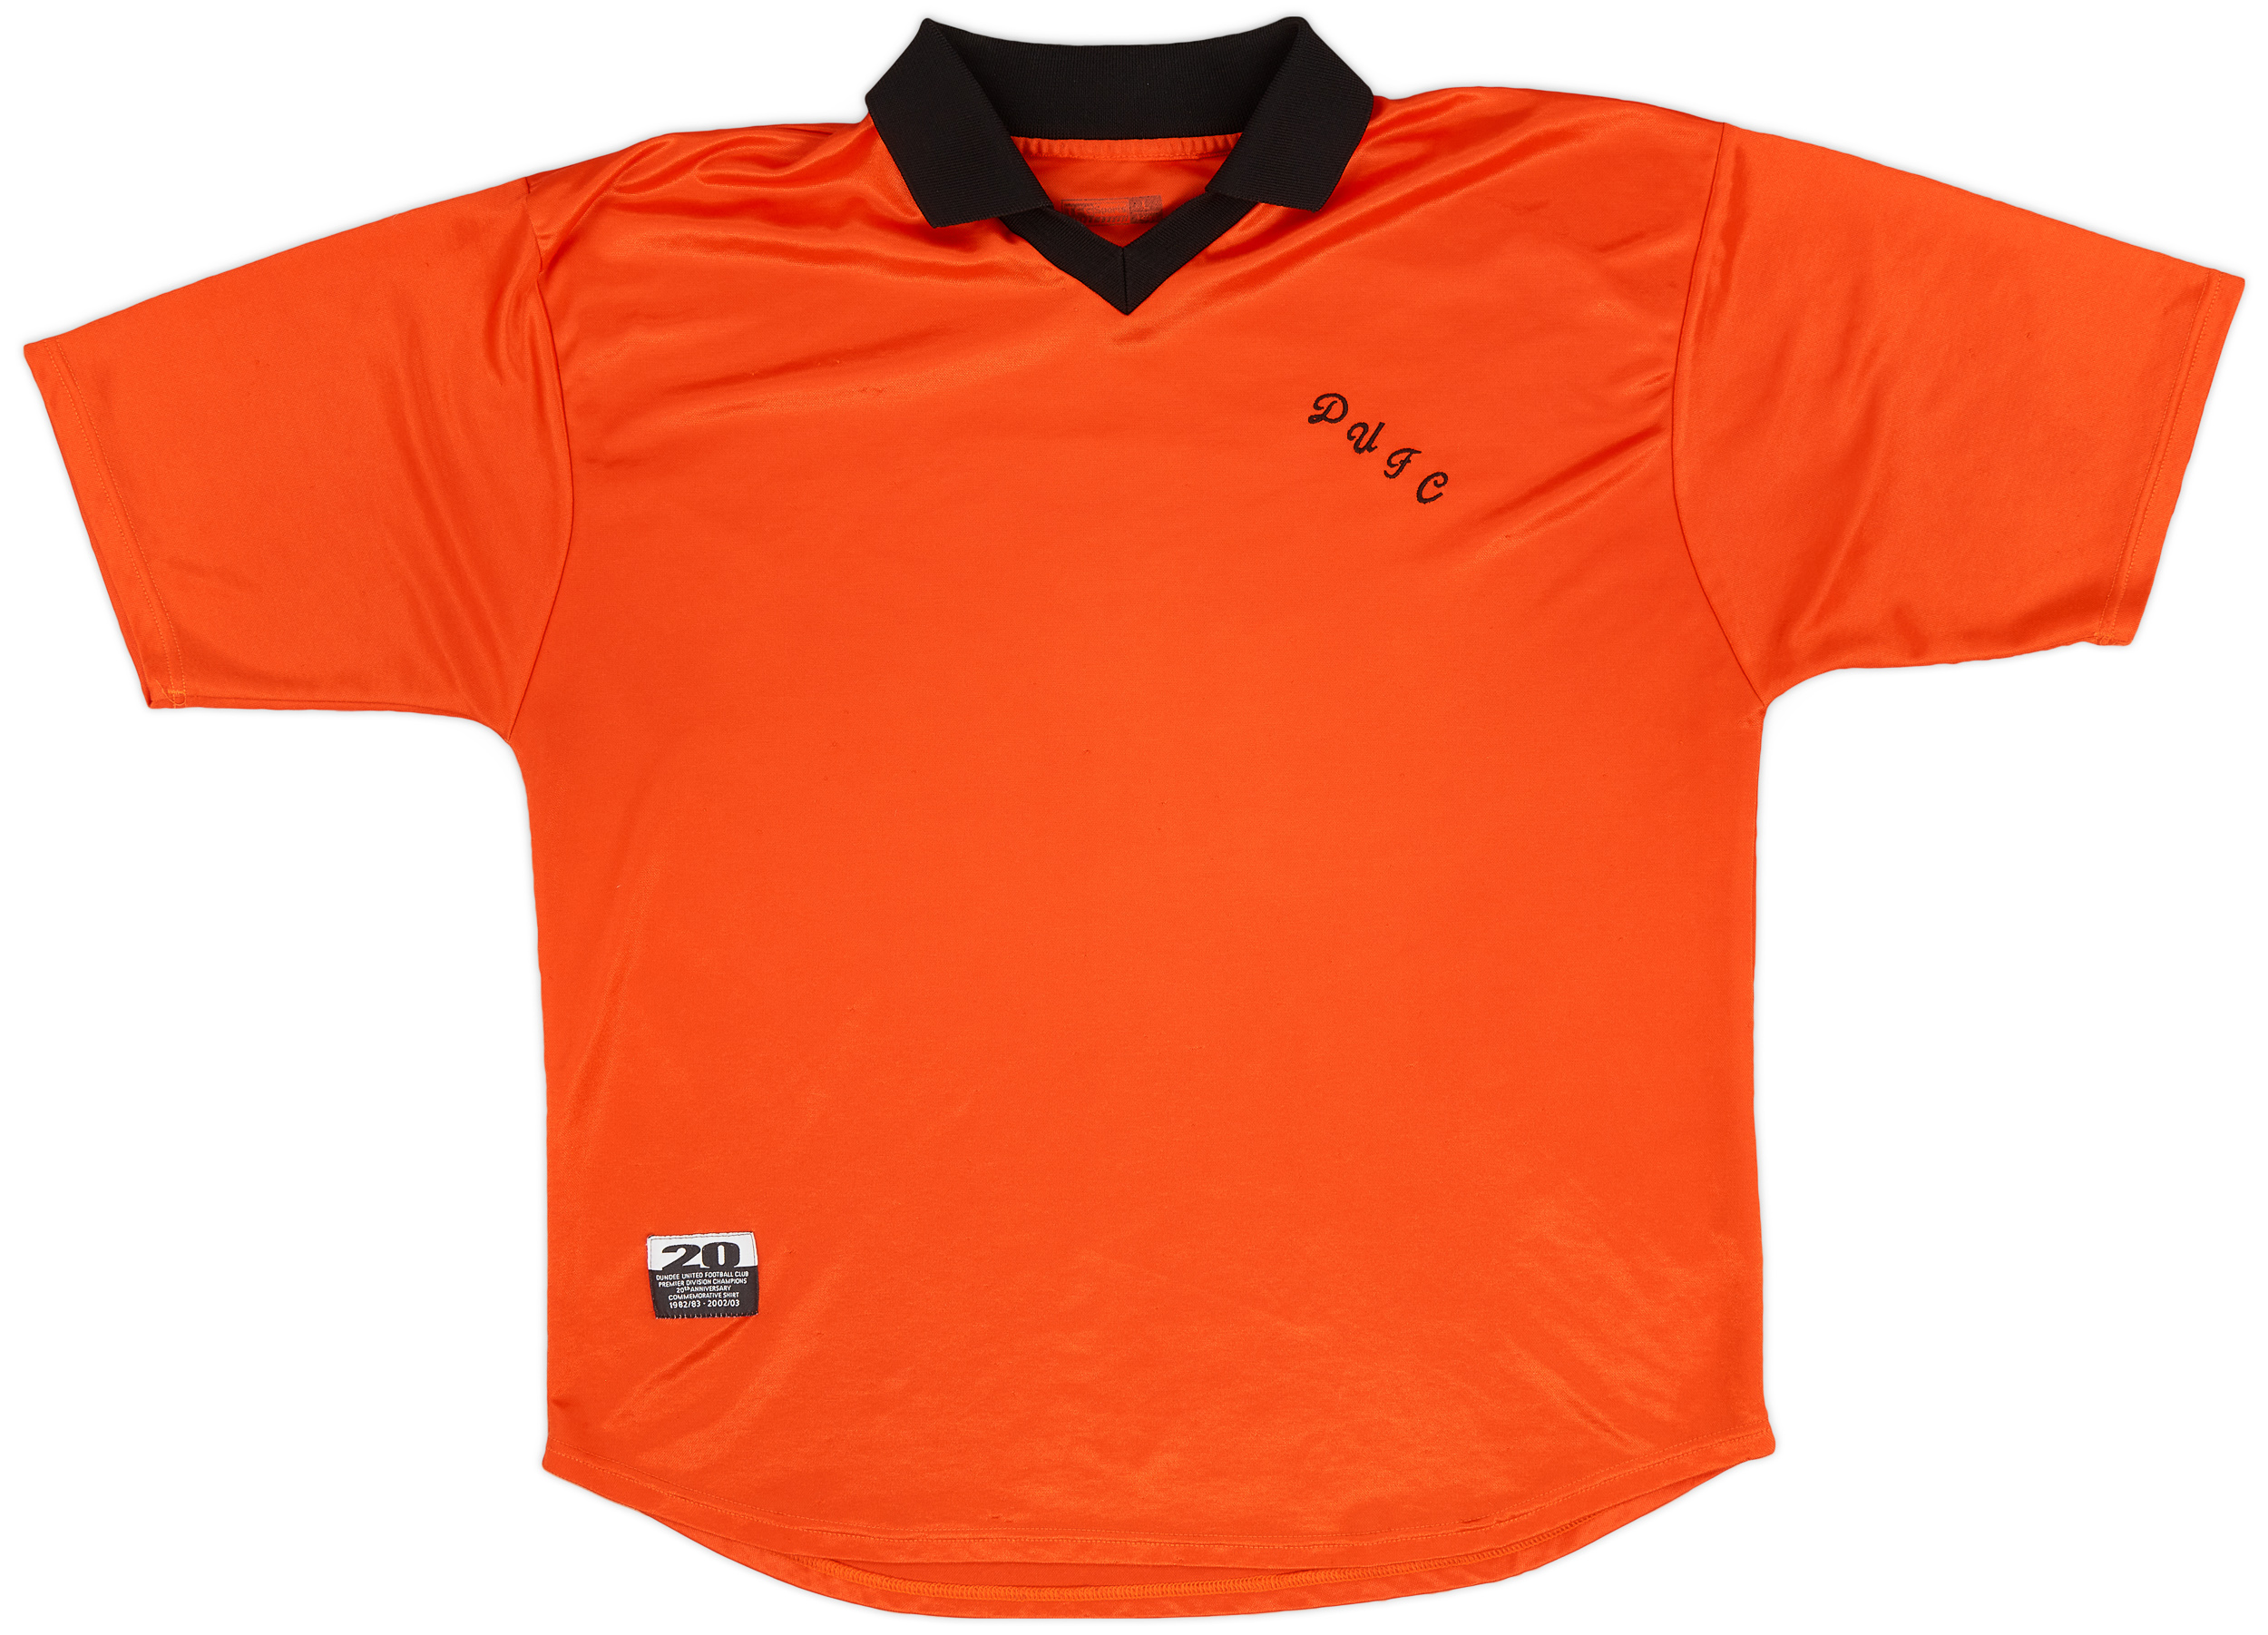 Dundee United   shirt (Original)